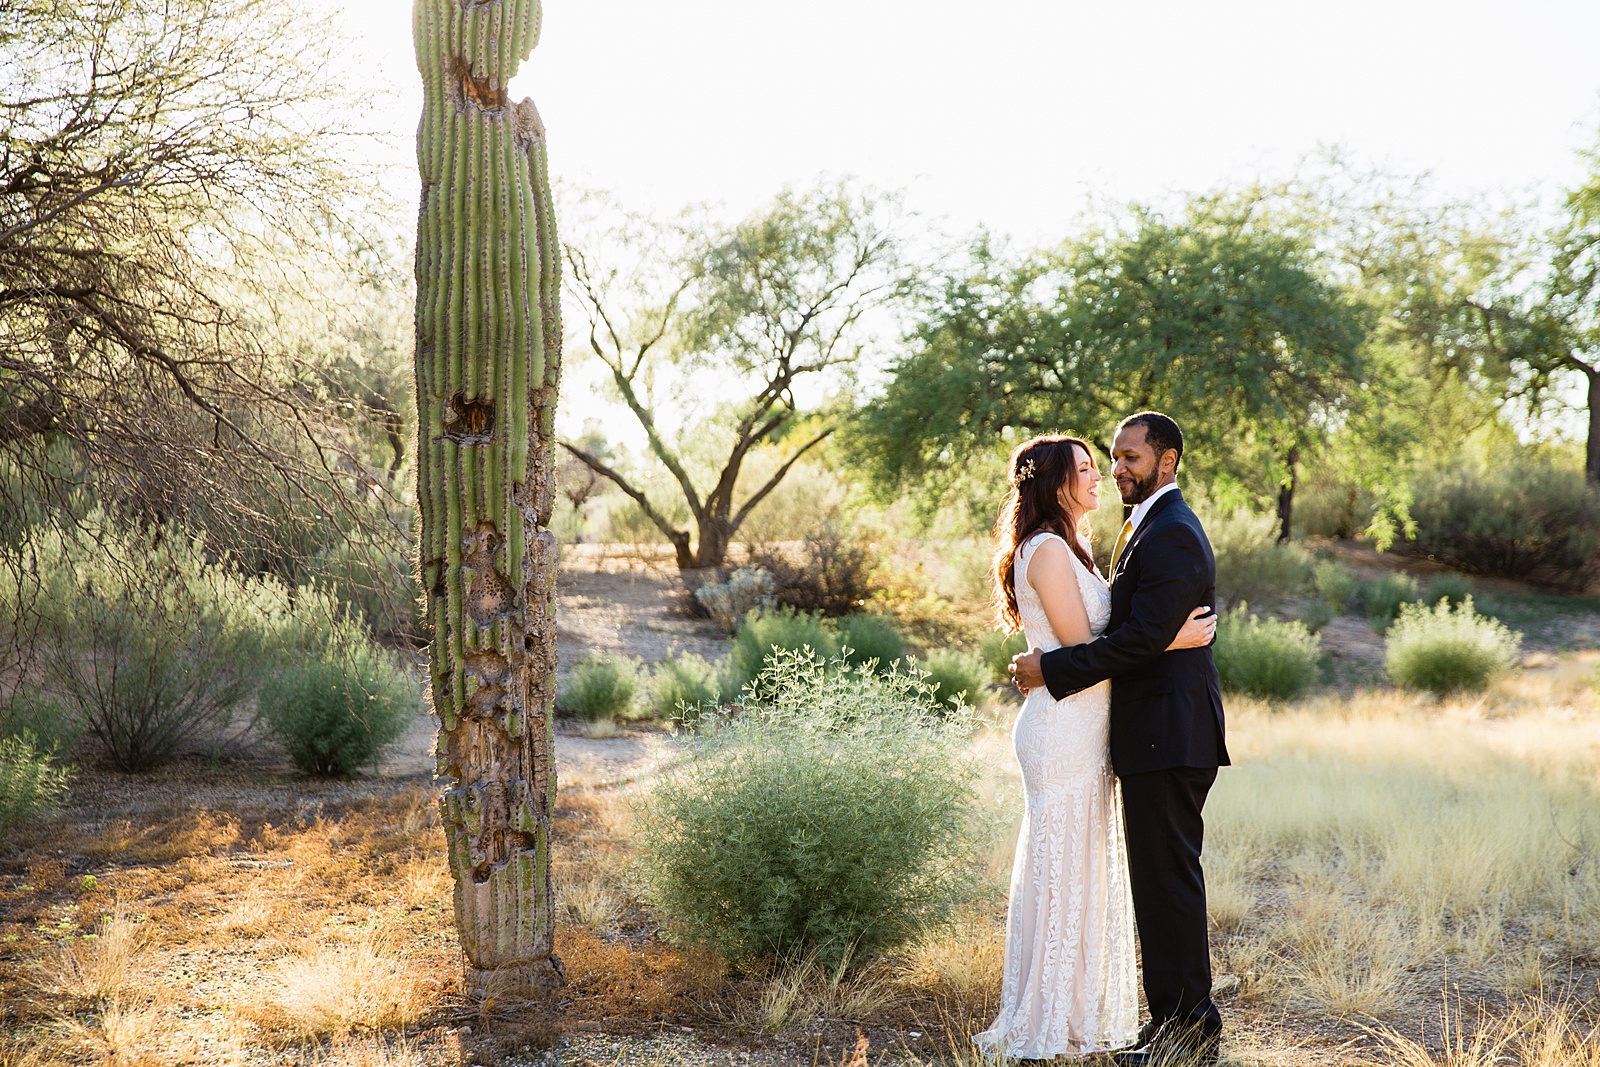 Bride and groom pose during their Backyard Micro wedding by Arizona wedding photographer PMA Photography.